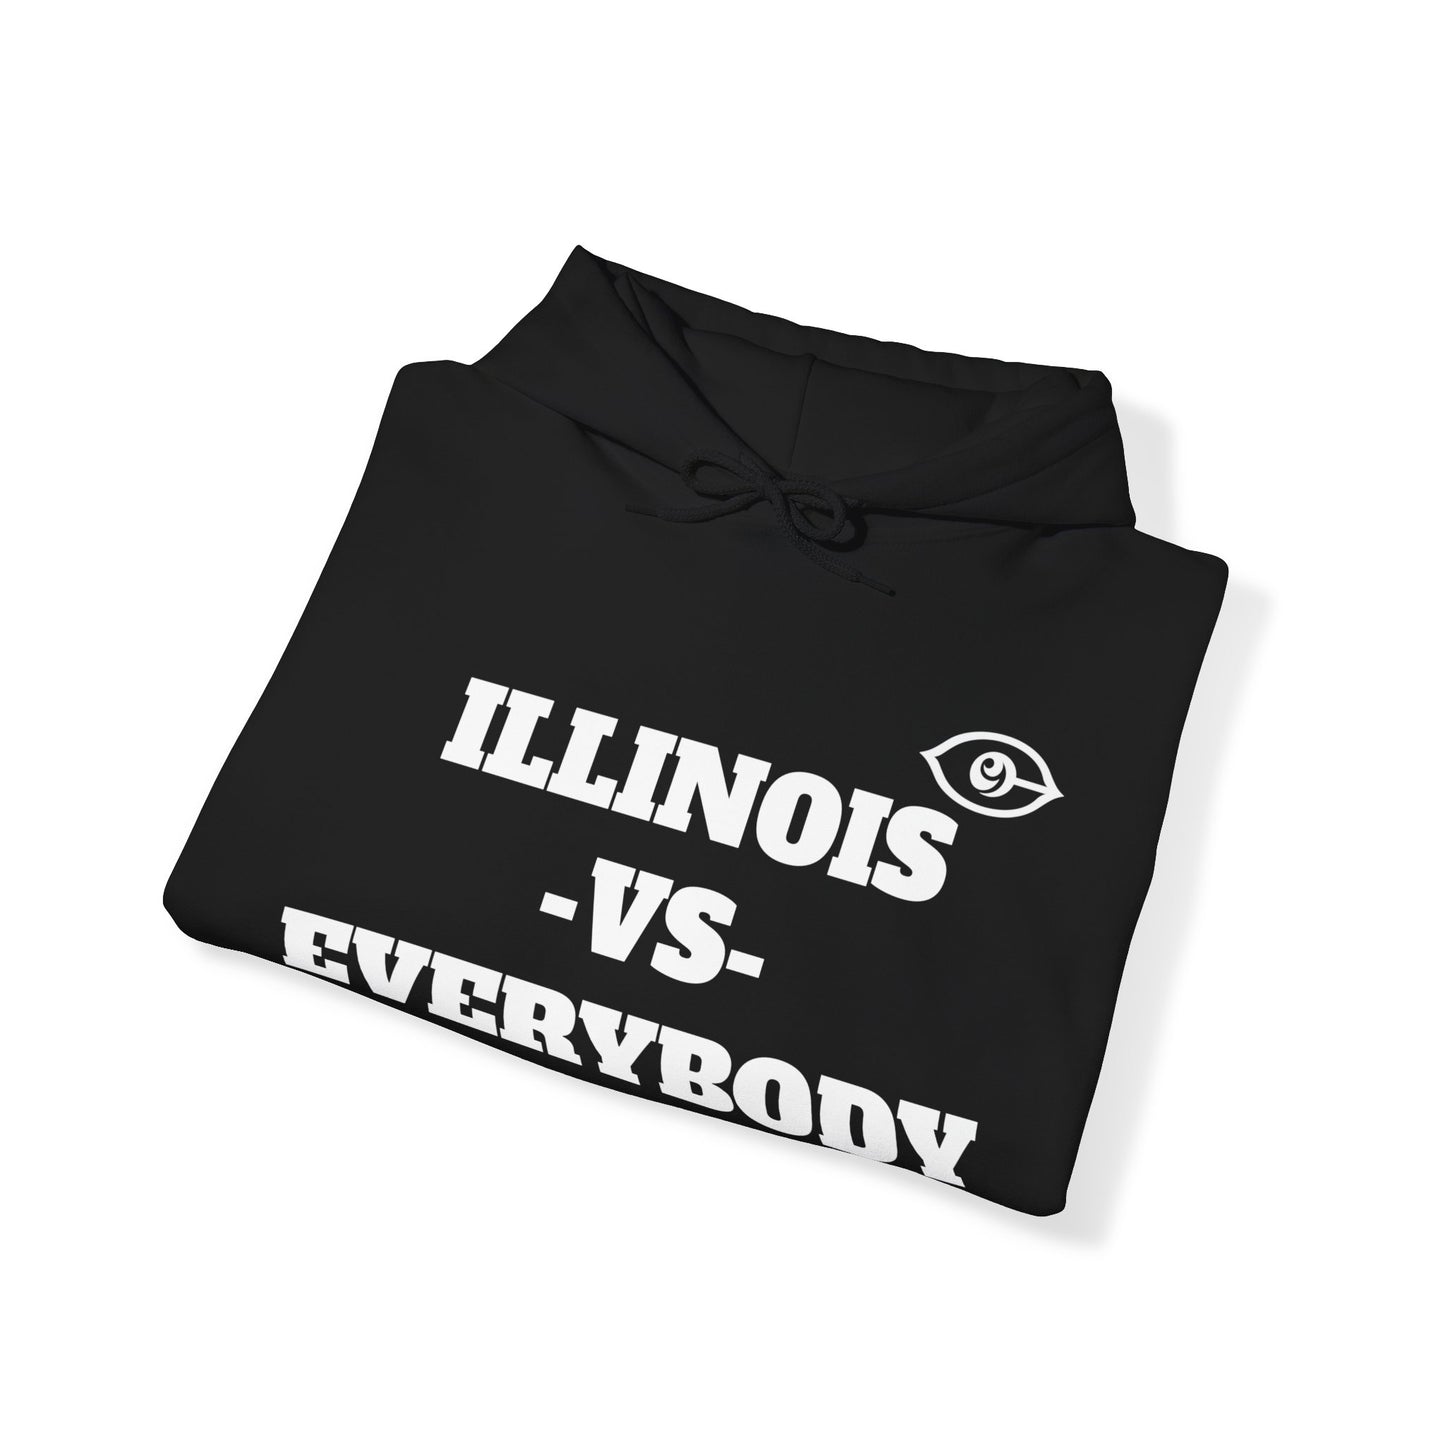 Illinois VS Everybody Unisex Heavy Blend™ Hoodie Sweatshirt